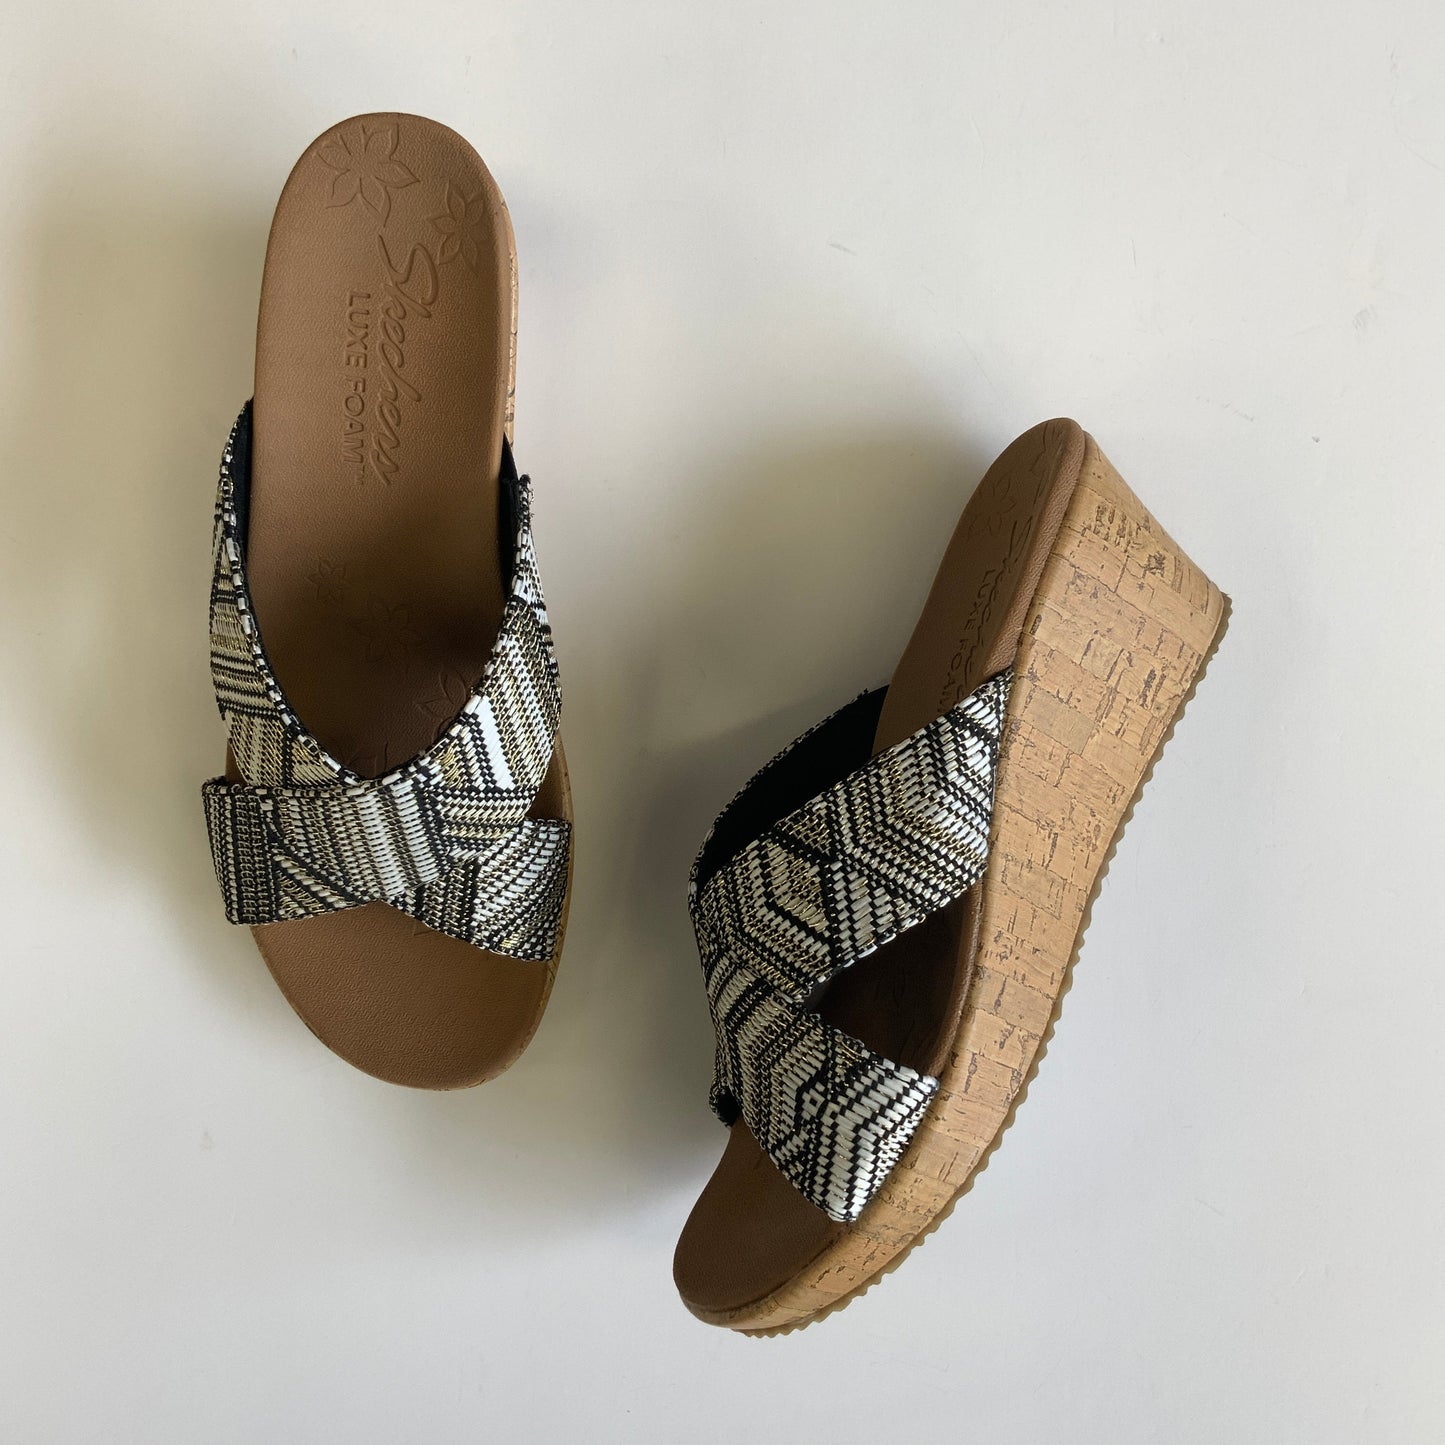 Sandals Heels Wedge By Skechers  Size: 9